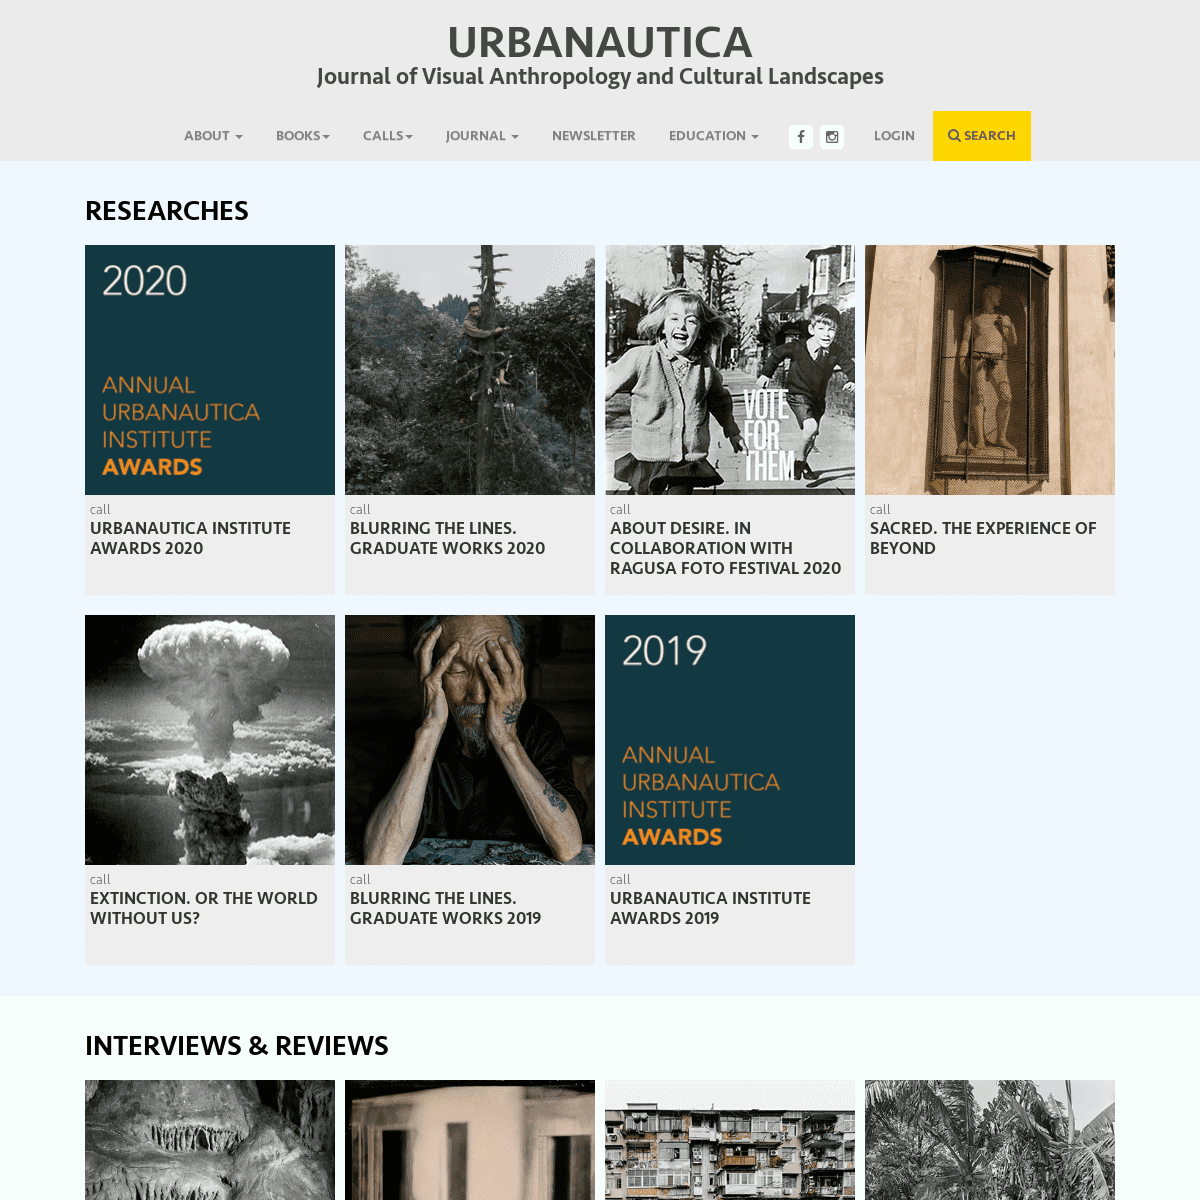 A complete backup of https://urbanautica.com